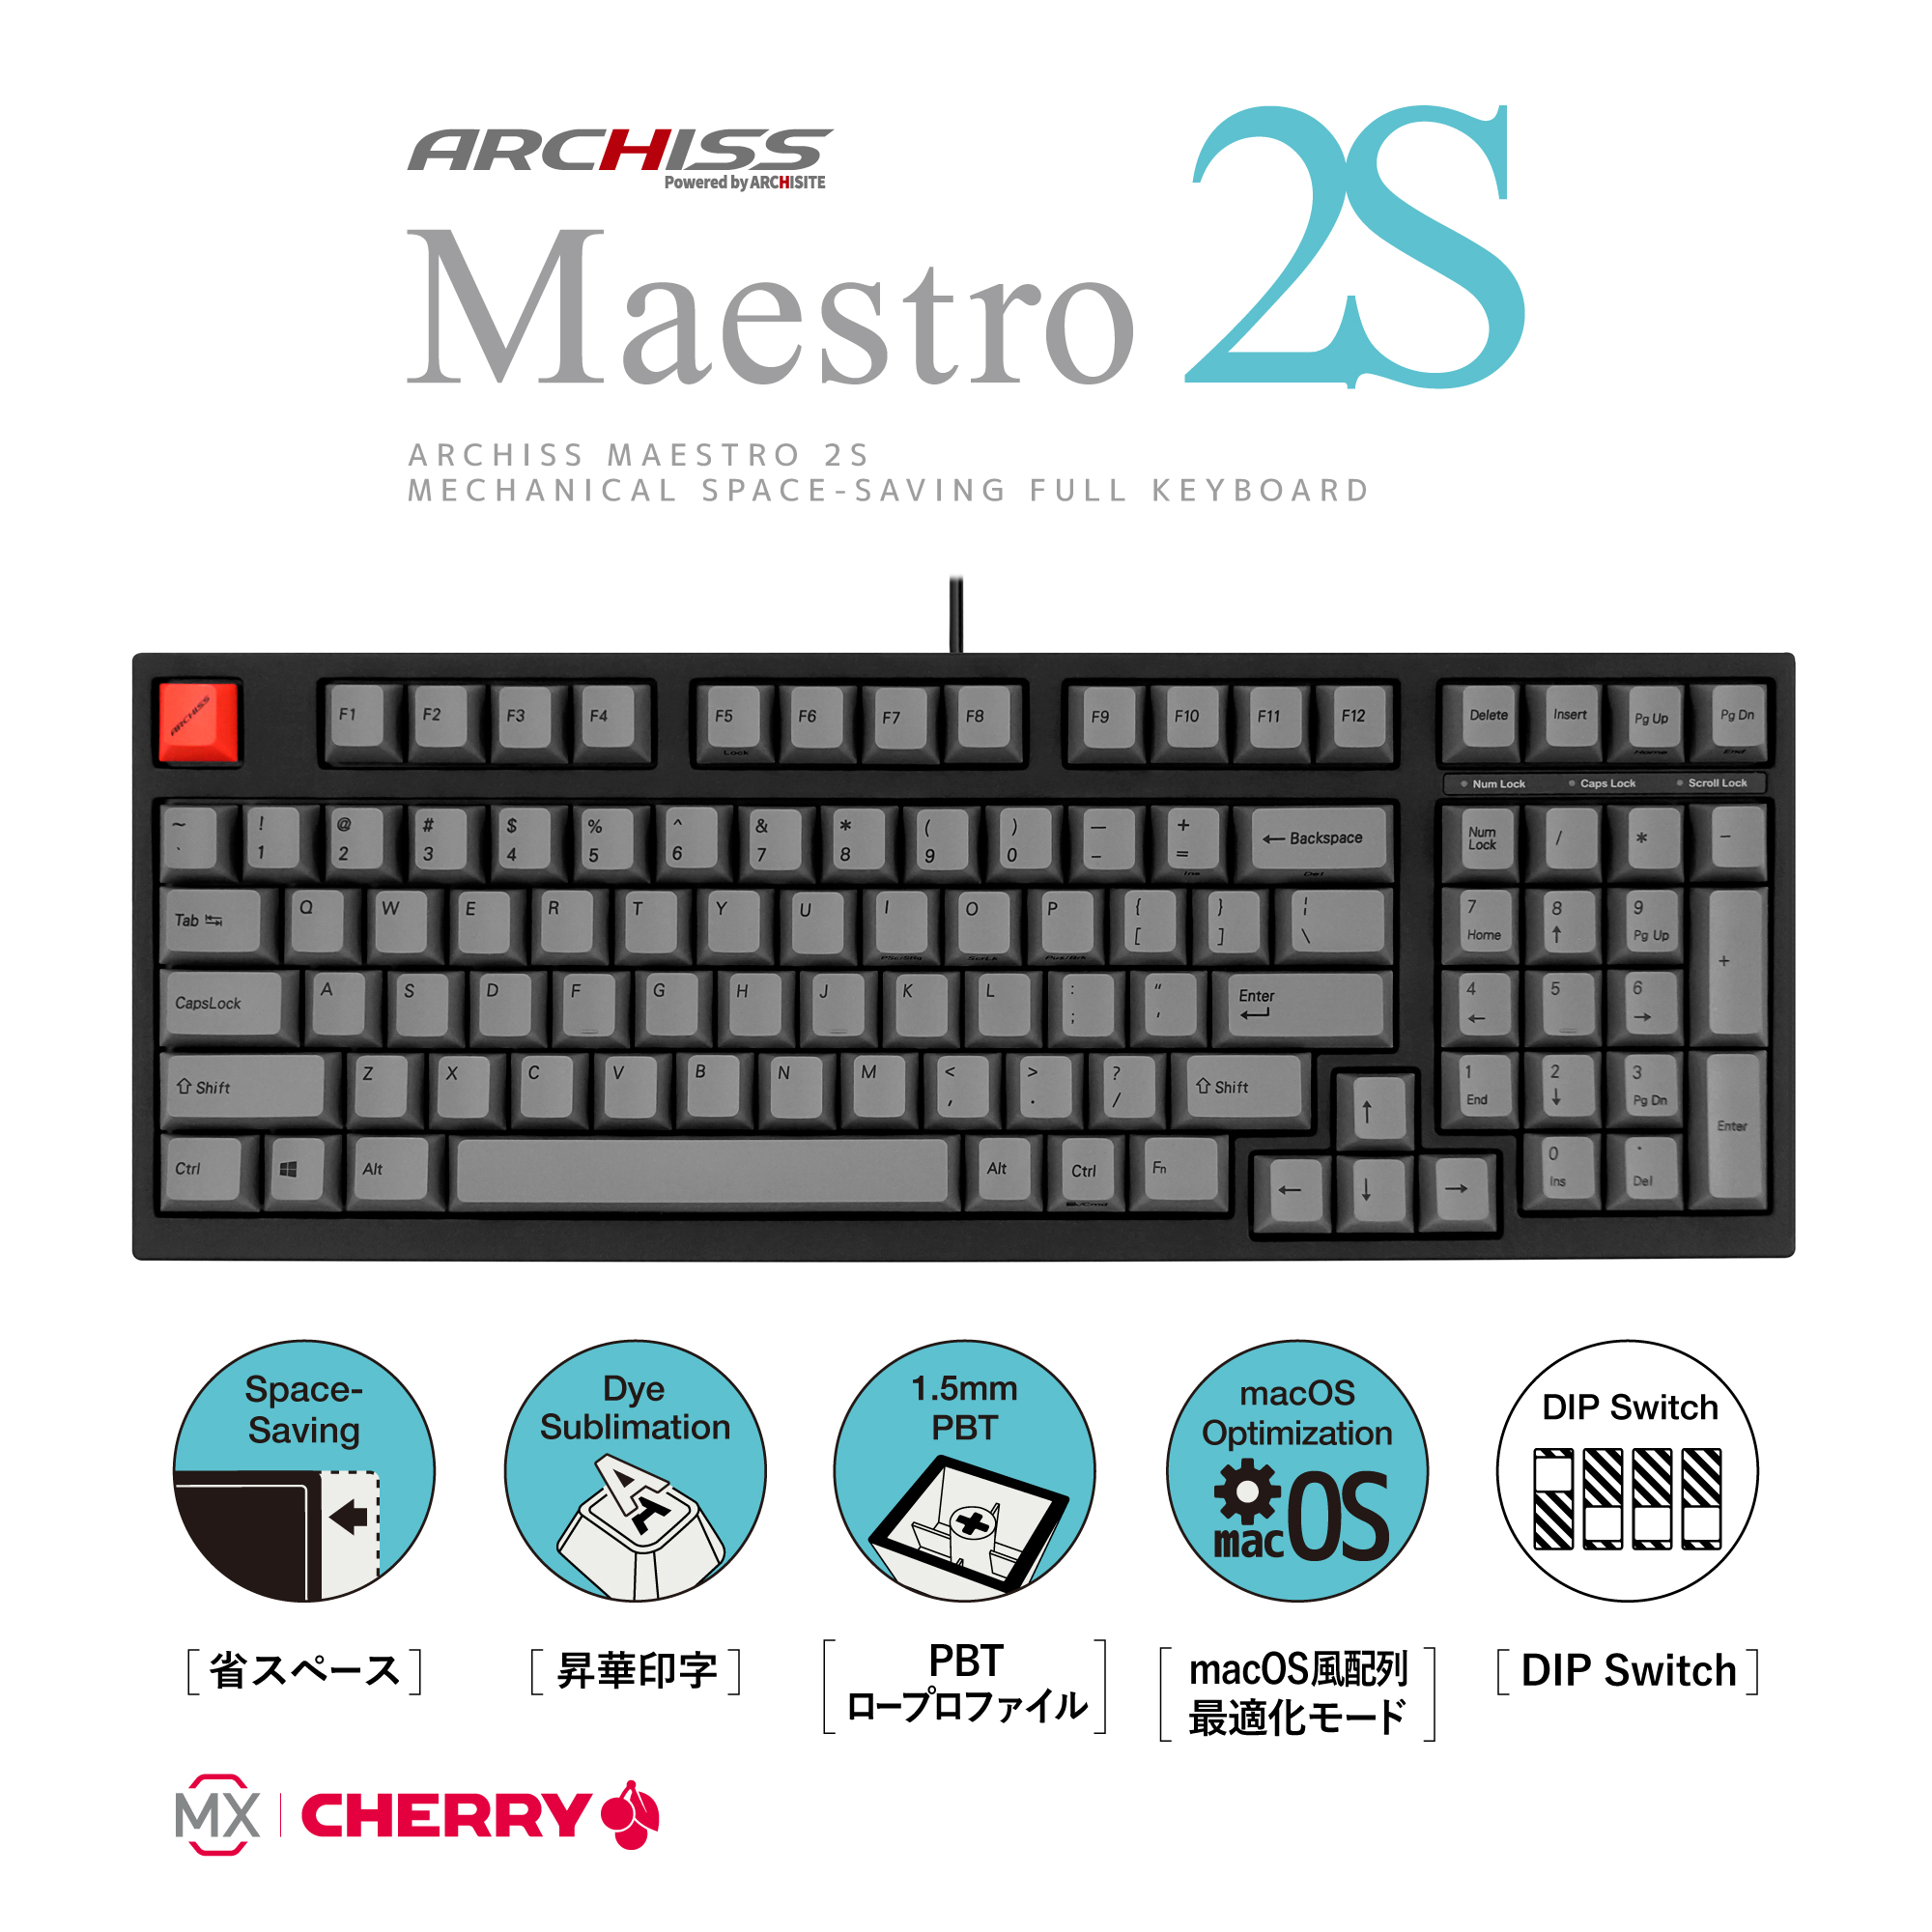 Archiss Maestro 2s 銀軸 英語配列 改造品